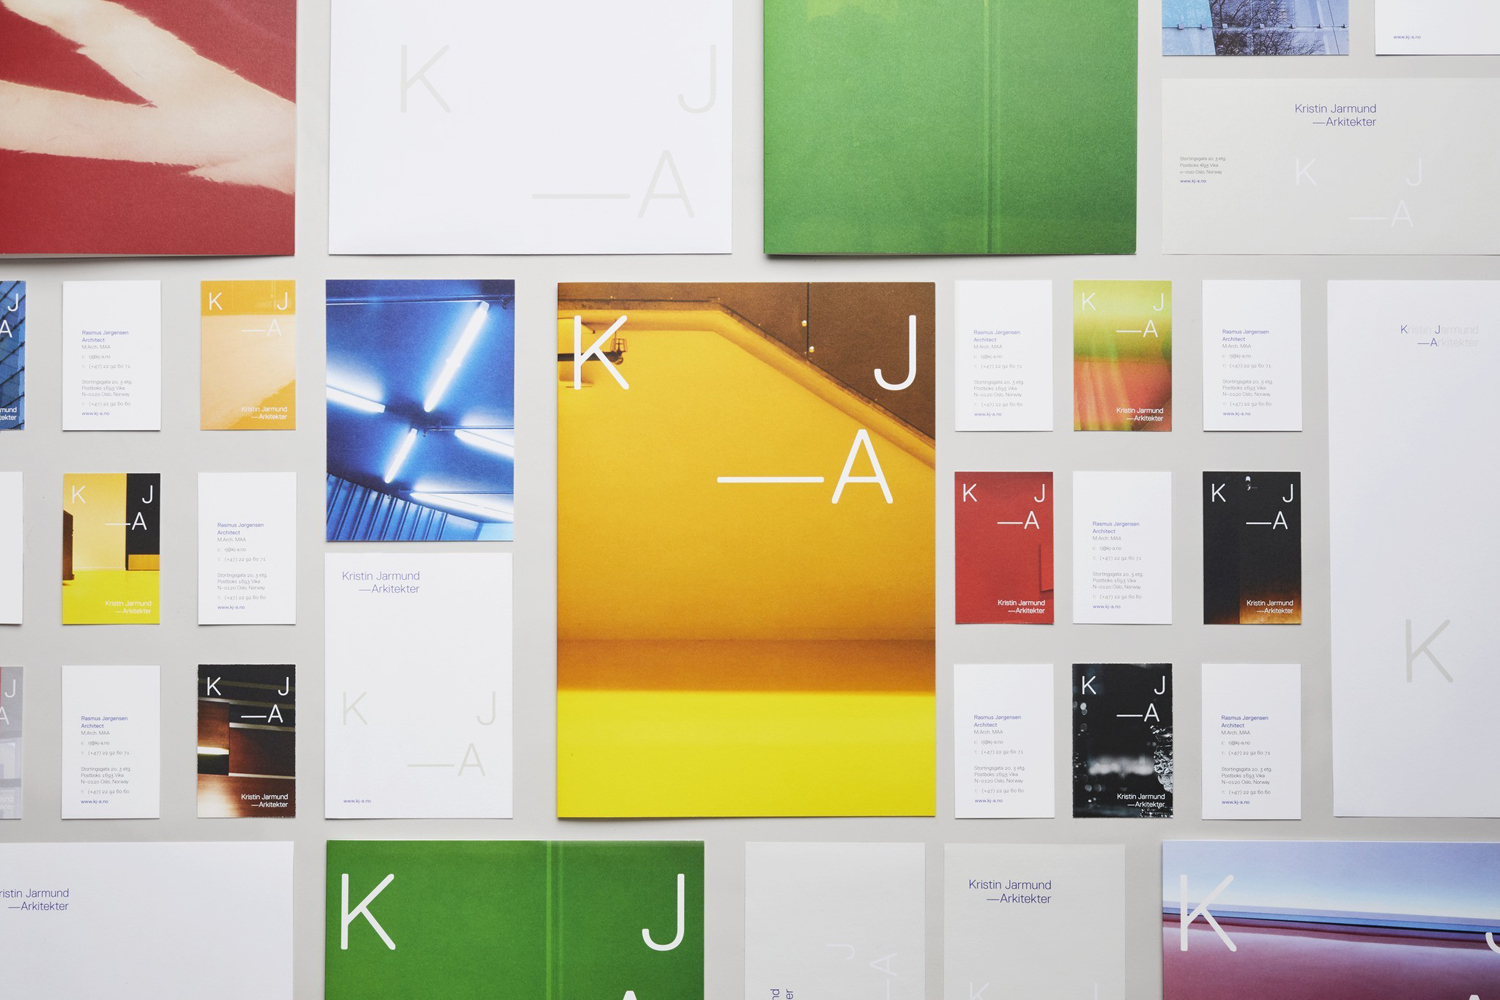 Logo, stationery and business cards designed by Snøhetta for Oslo-based Kristin Jarmund Architects